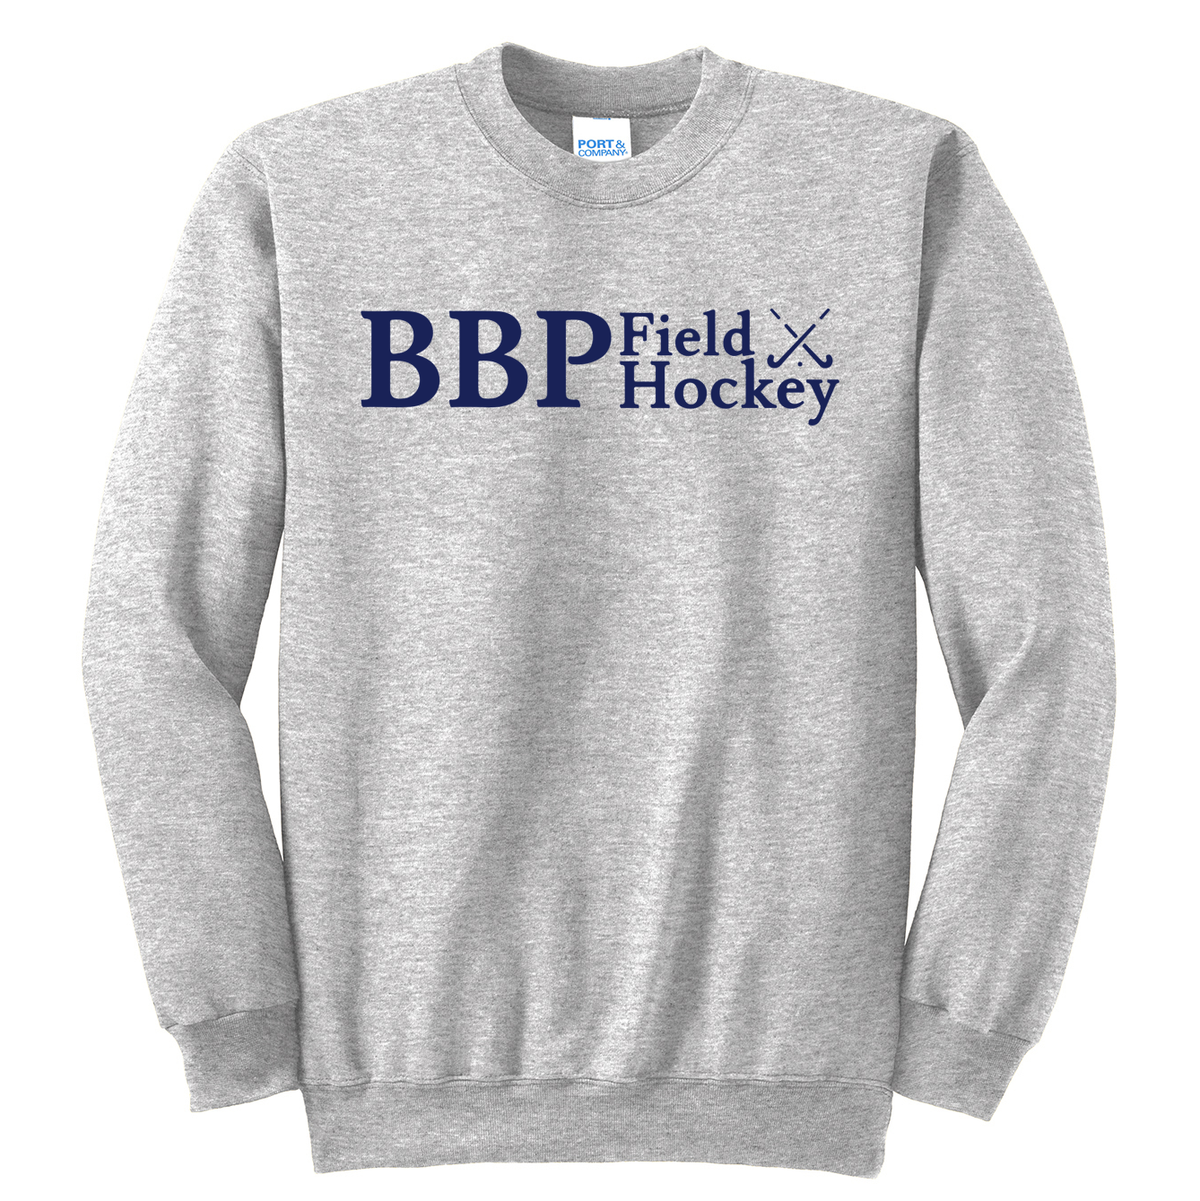 BBP Field Hockey Crew Neck Sweater